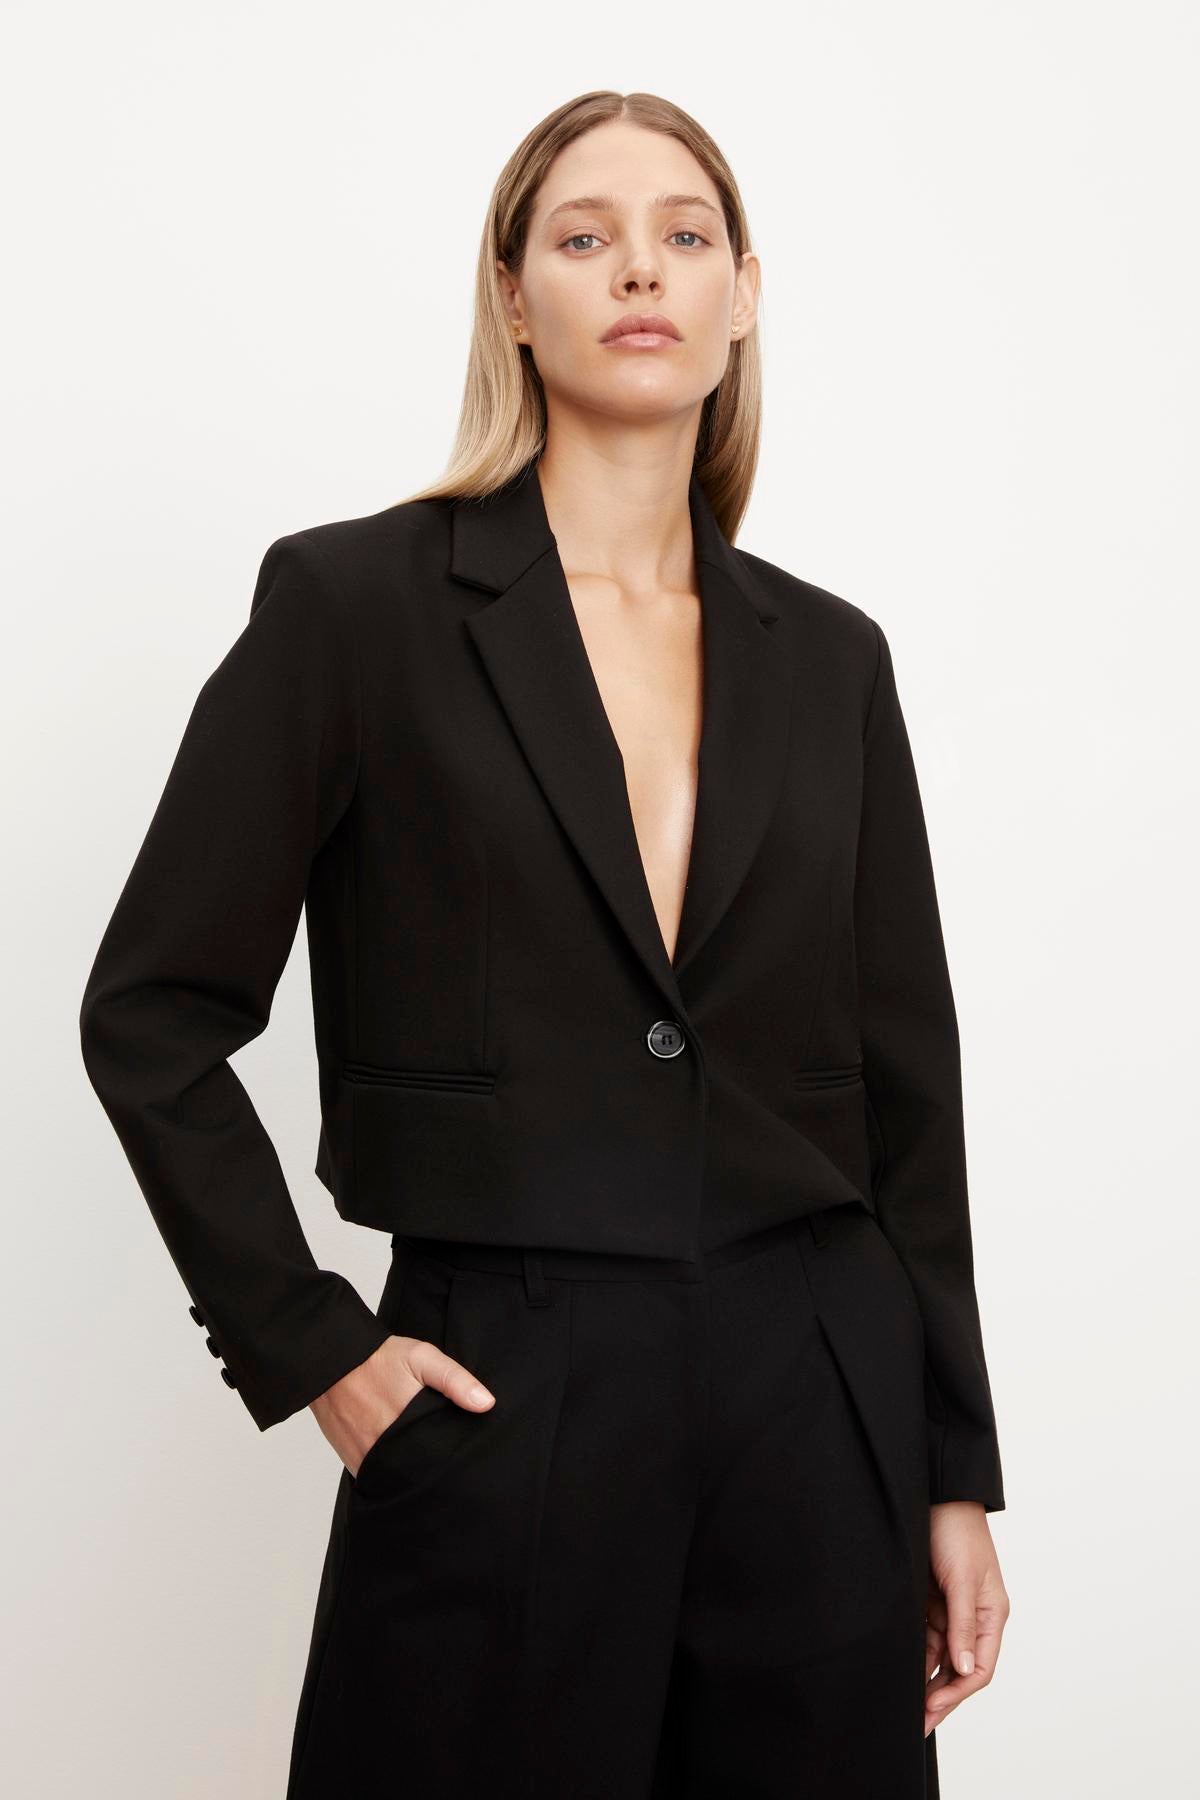 The model is wearing a black Velvet by Graham & Spencer Anya Ponti Cropped Blazer.-35655683539137